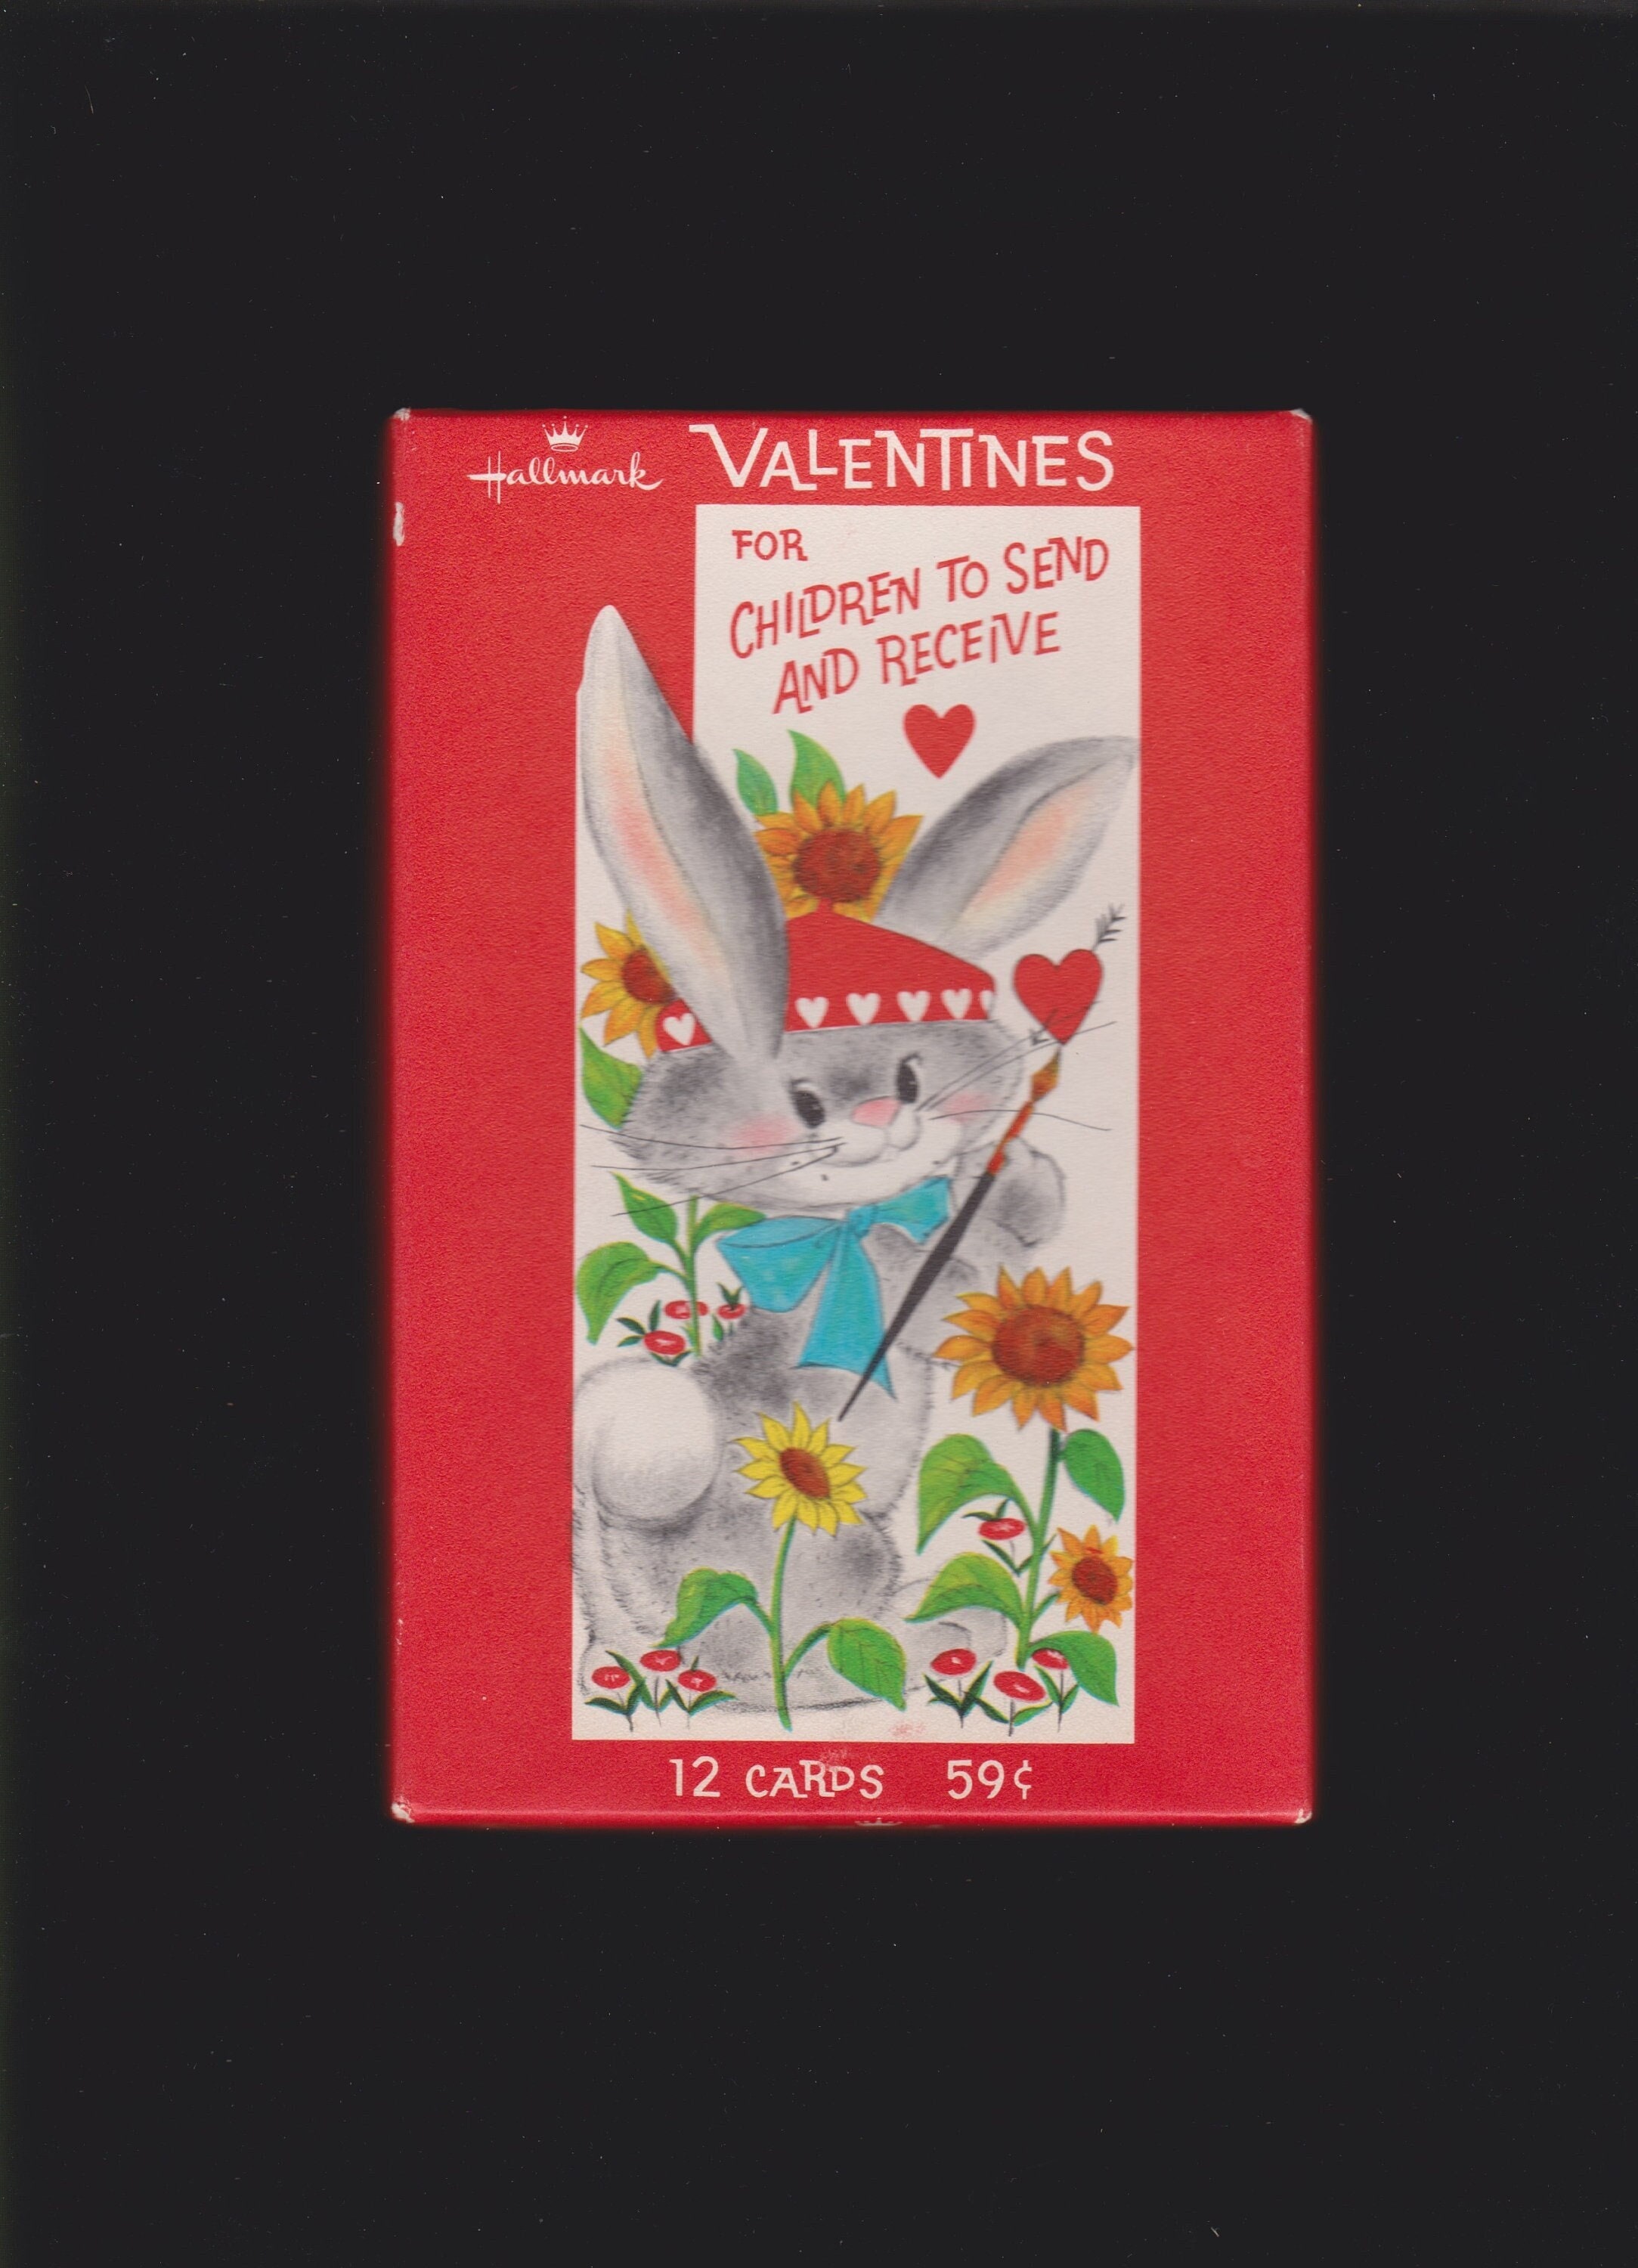 Vintage printable postcards / romantic vignettes of children, flowers,  people in love / digital collage sheet / instant download / cards